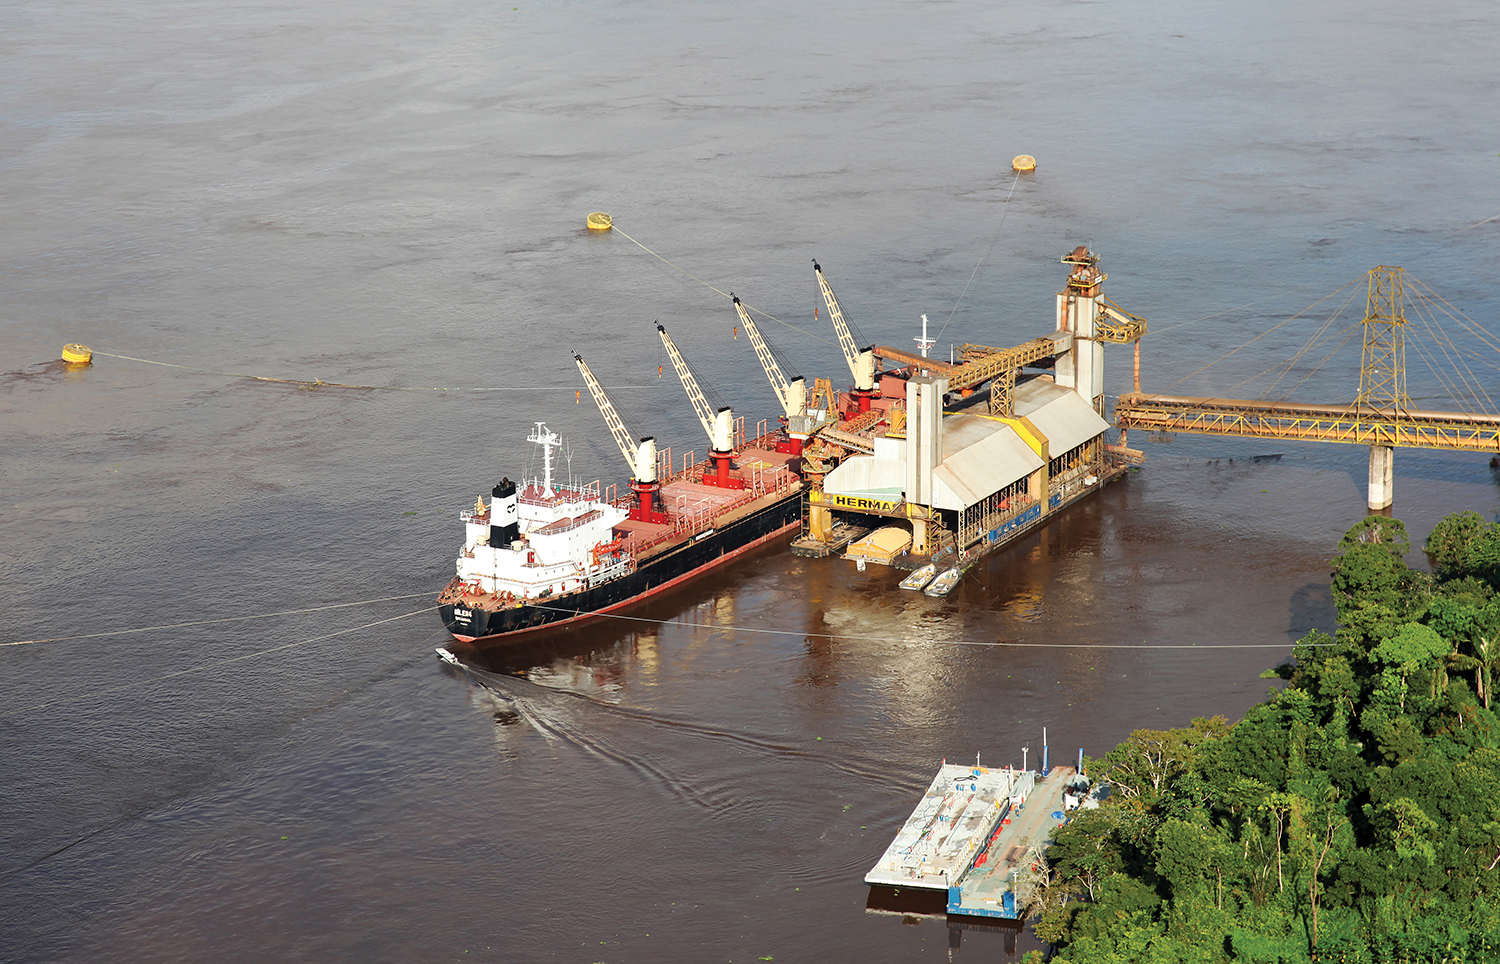 Siwertell grain unloder operate on a barge